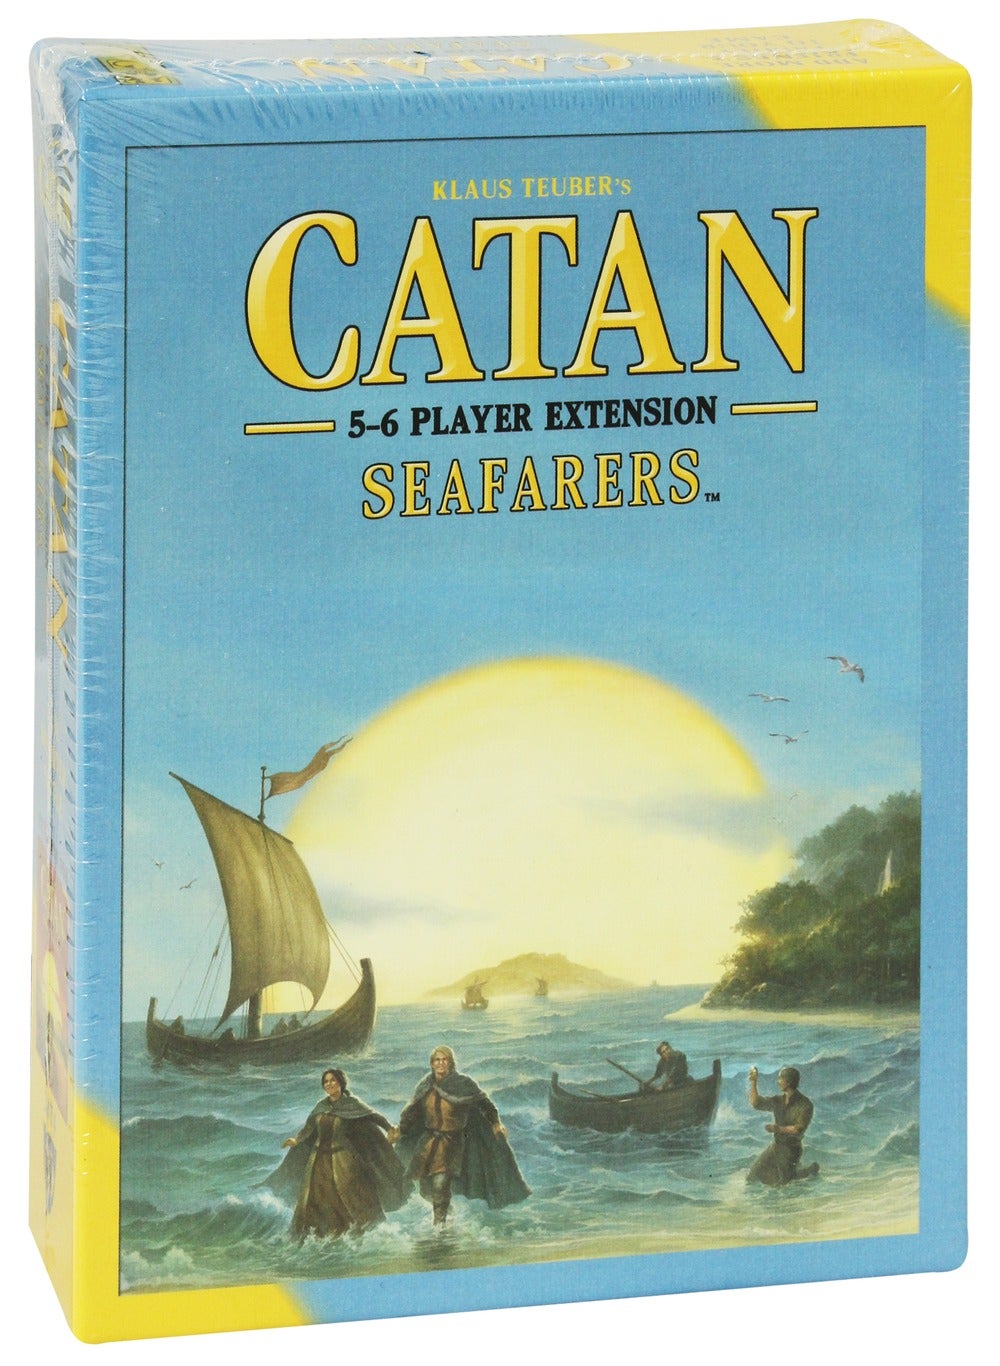 catan seafarers 5-6 player extension